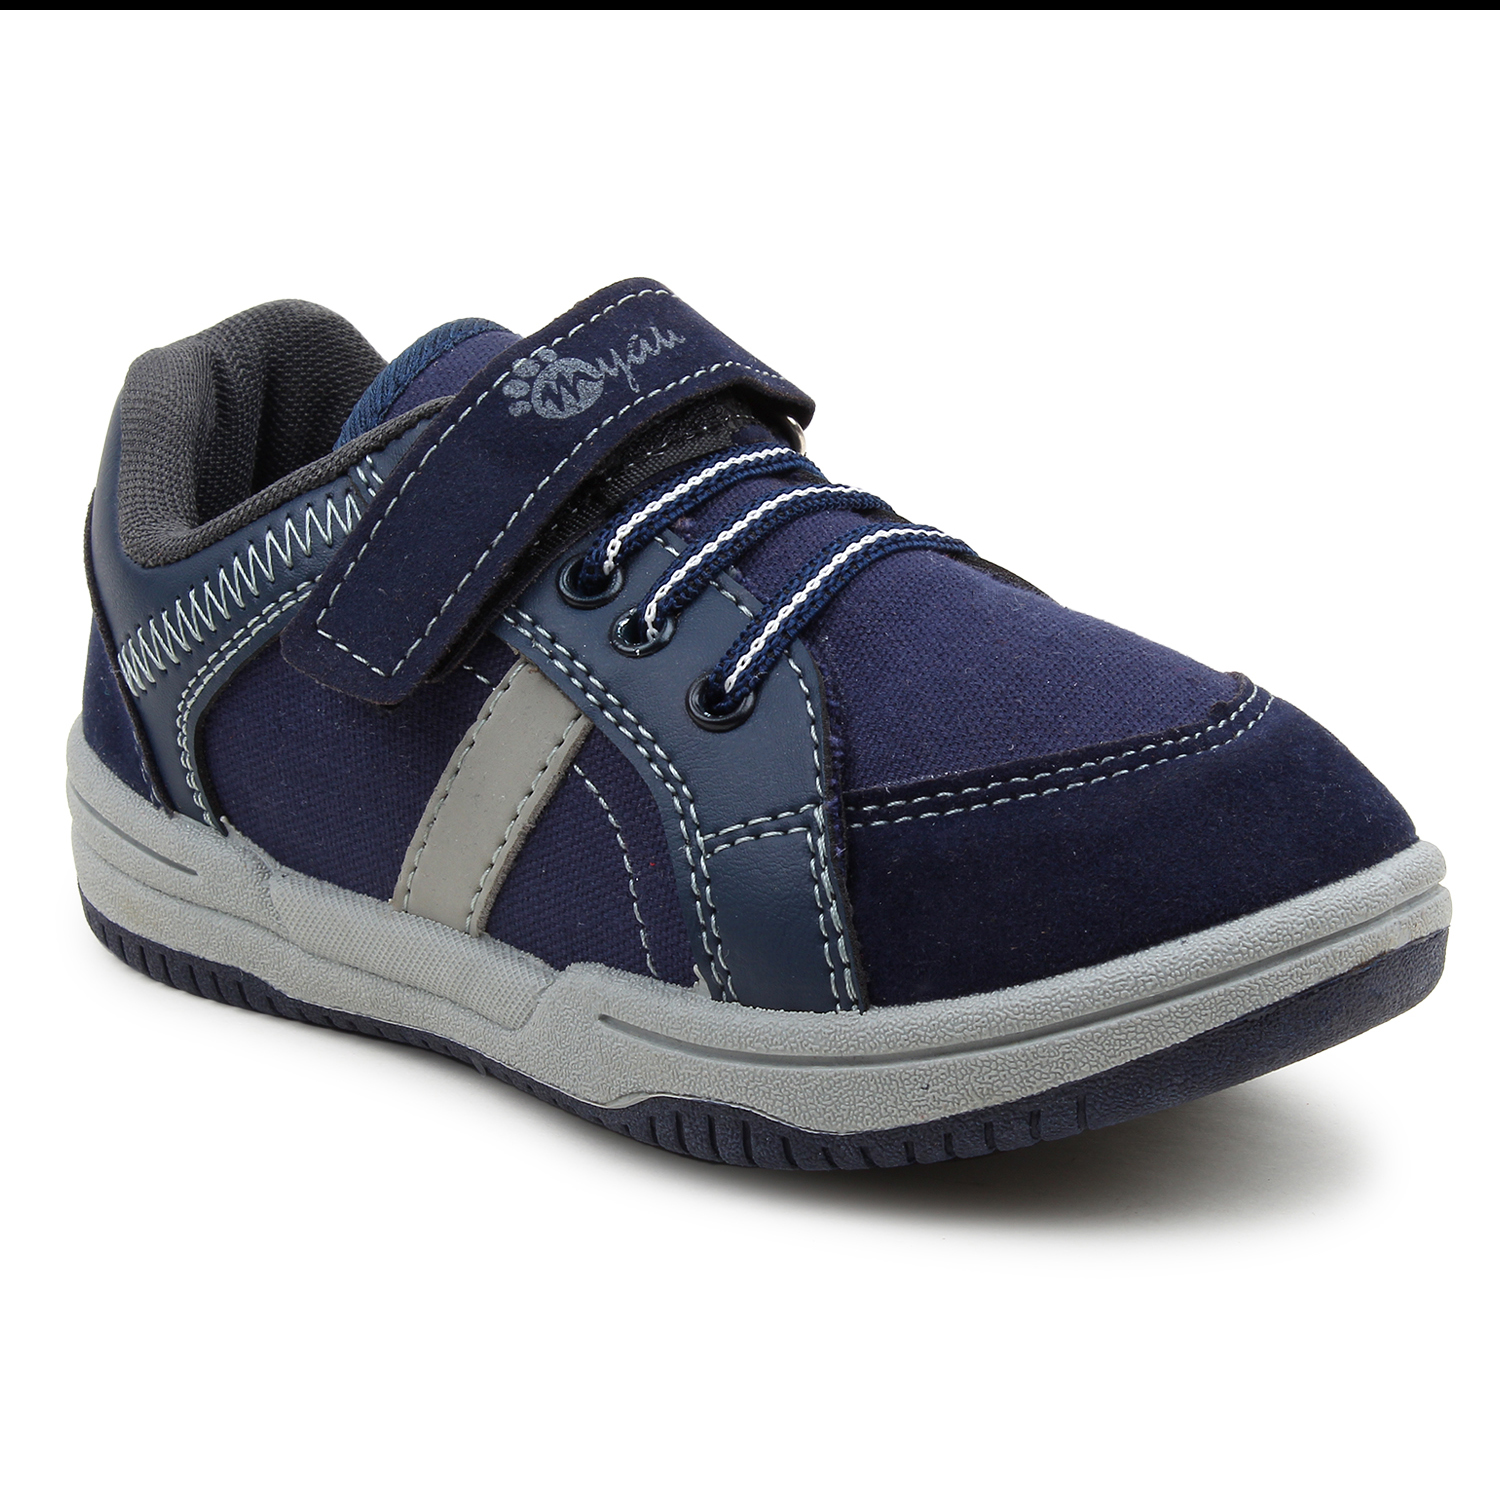 Buy Myau Boys Girls Velcro Sneakers Online @ ₹429 from ShopClues